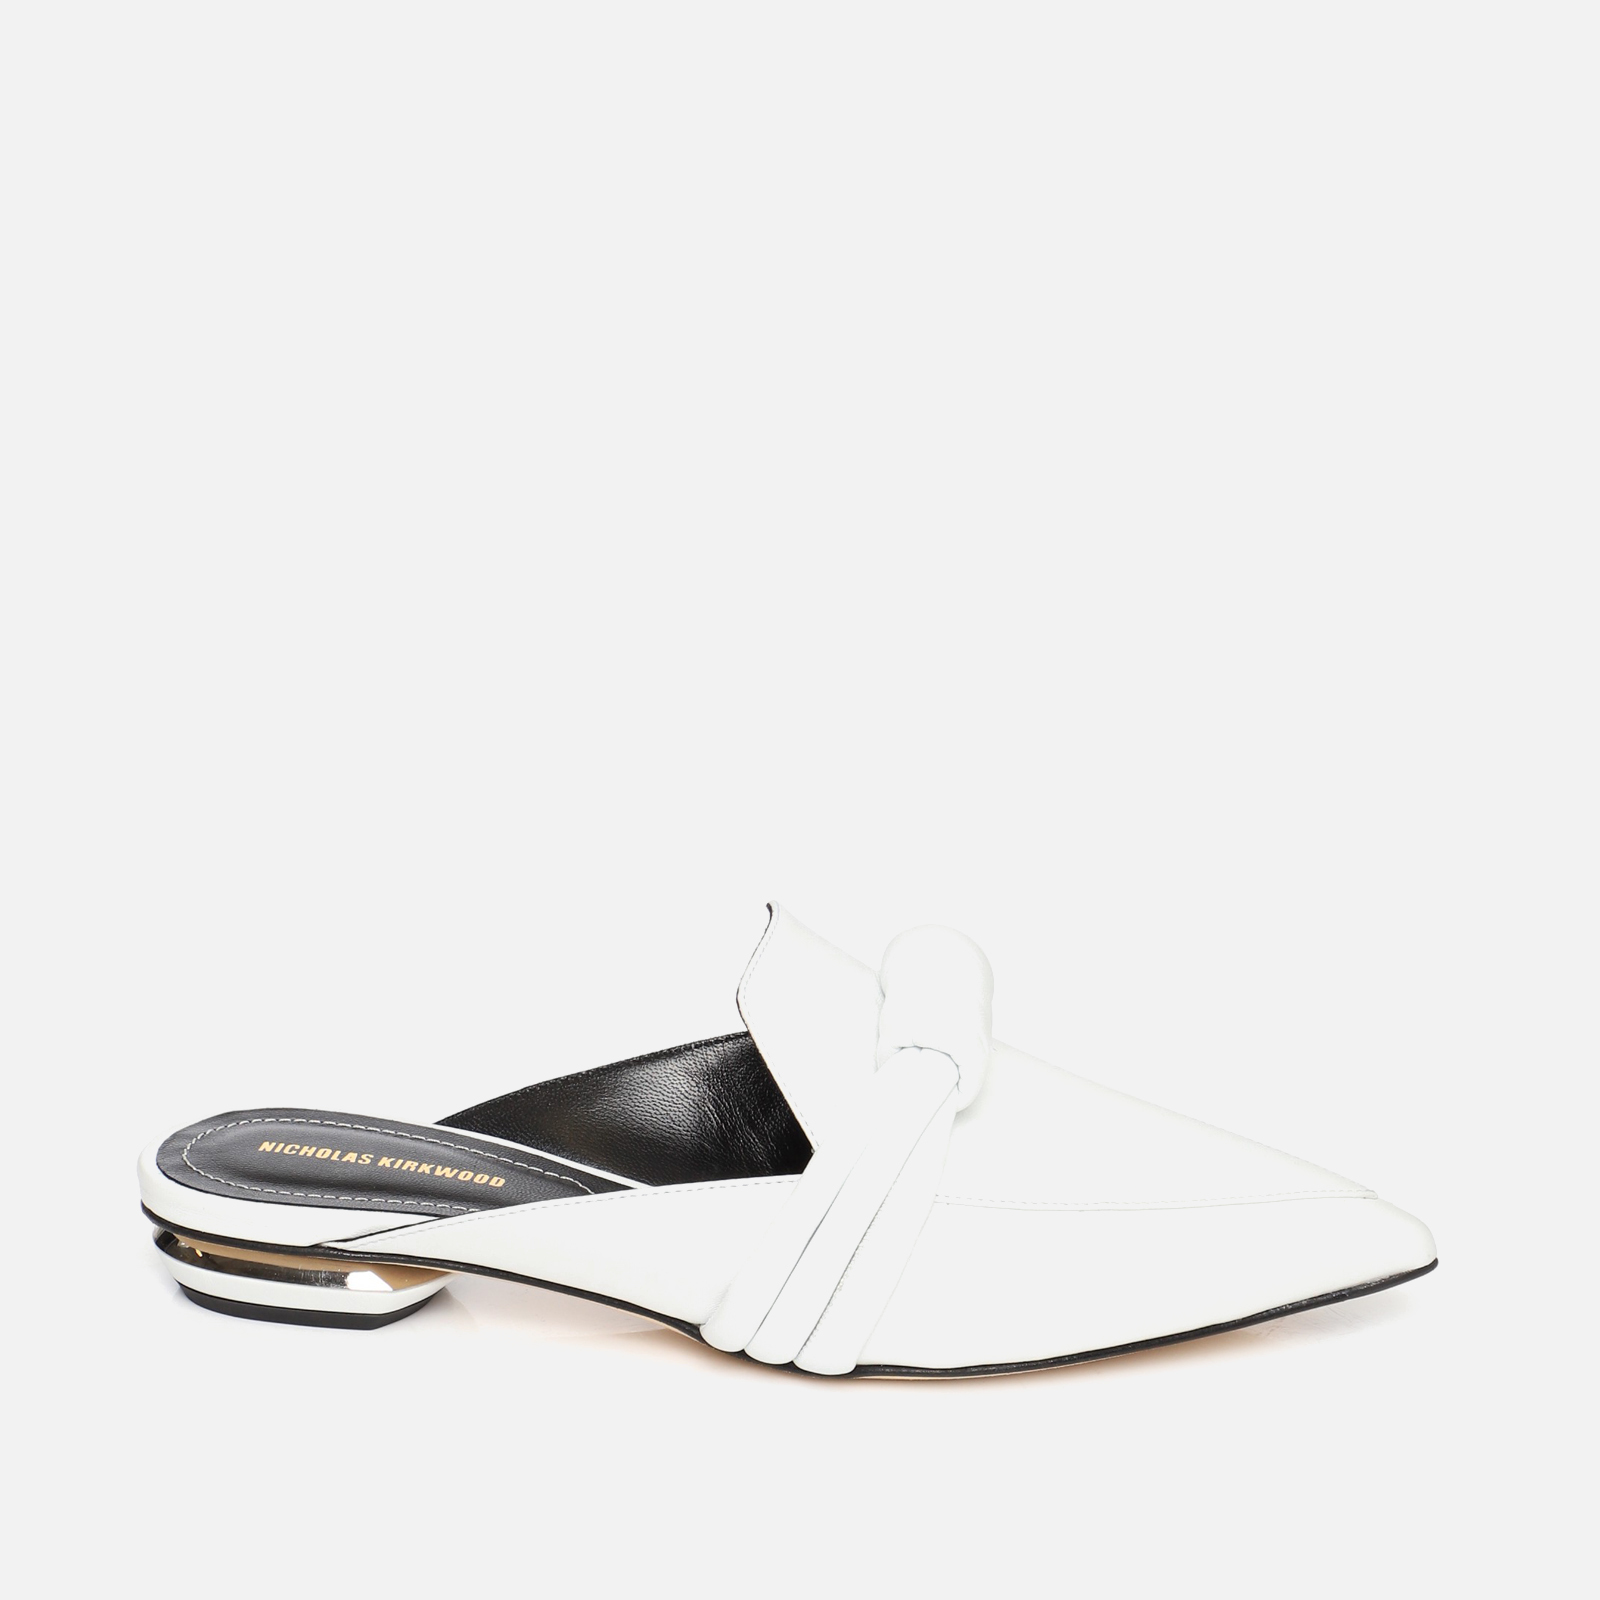 NICHOLAS KIRKWOOD White Leather Pearl Detail Mules/Shoes Size UK 6/EU 39